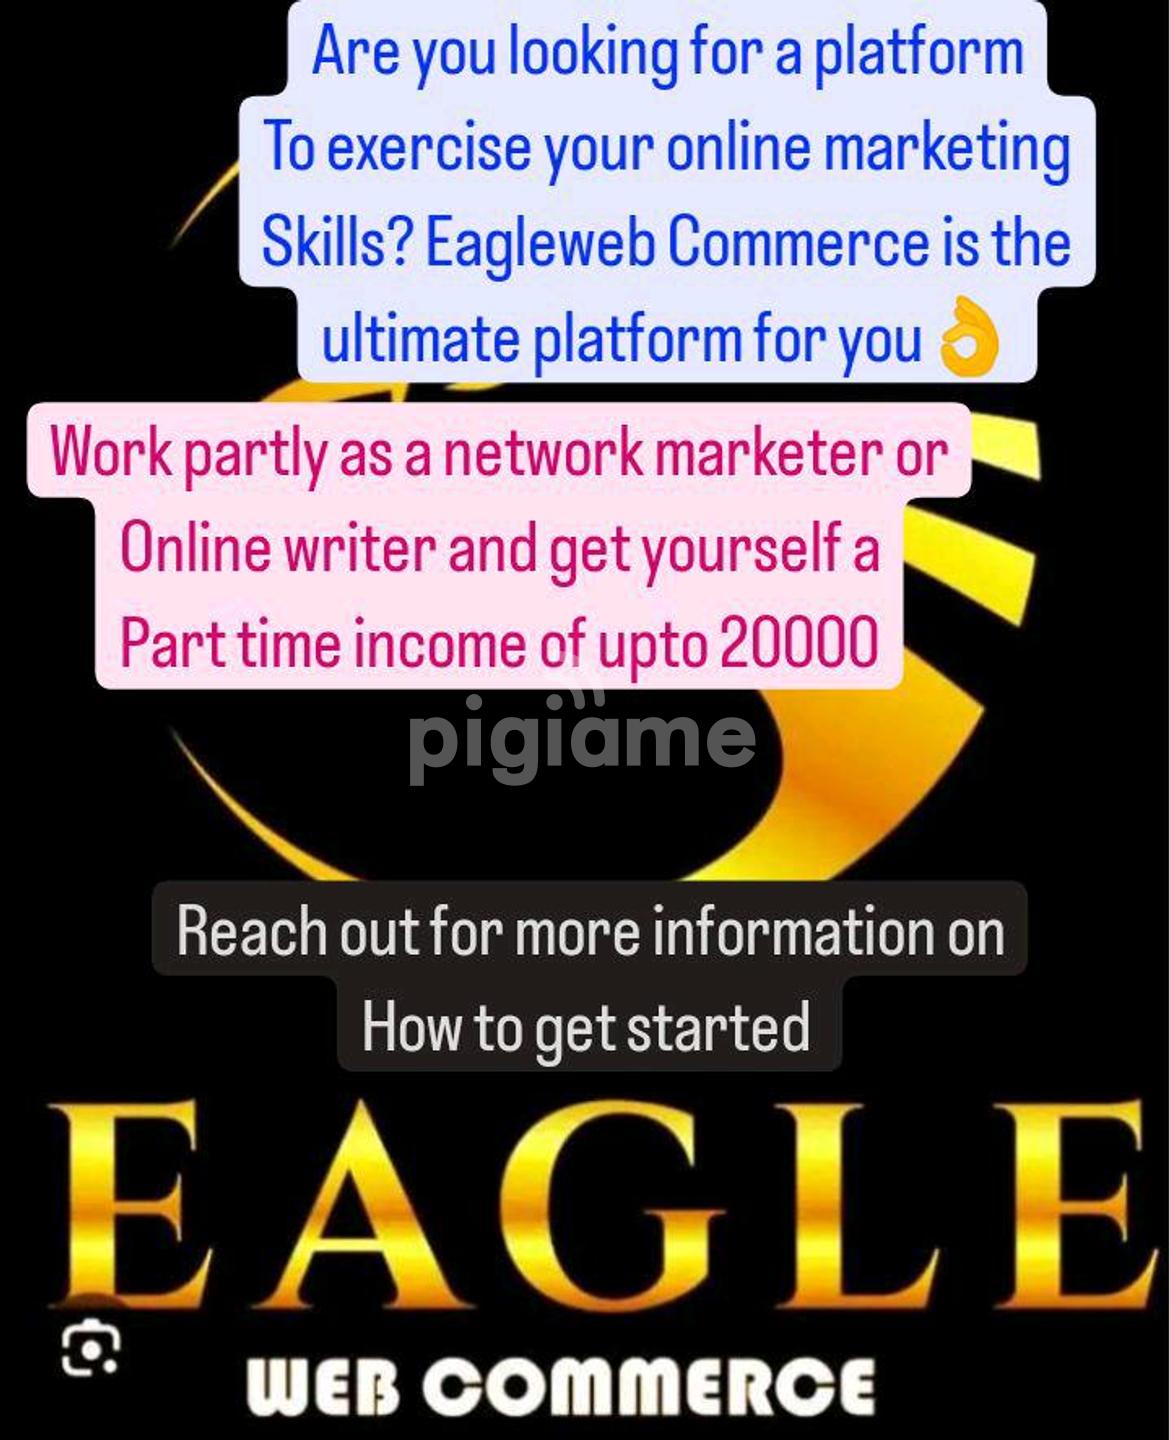 Eagleweb Commerce